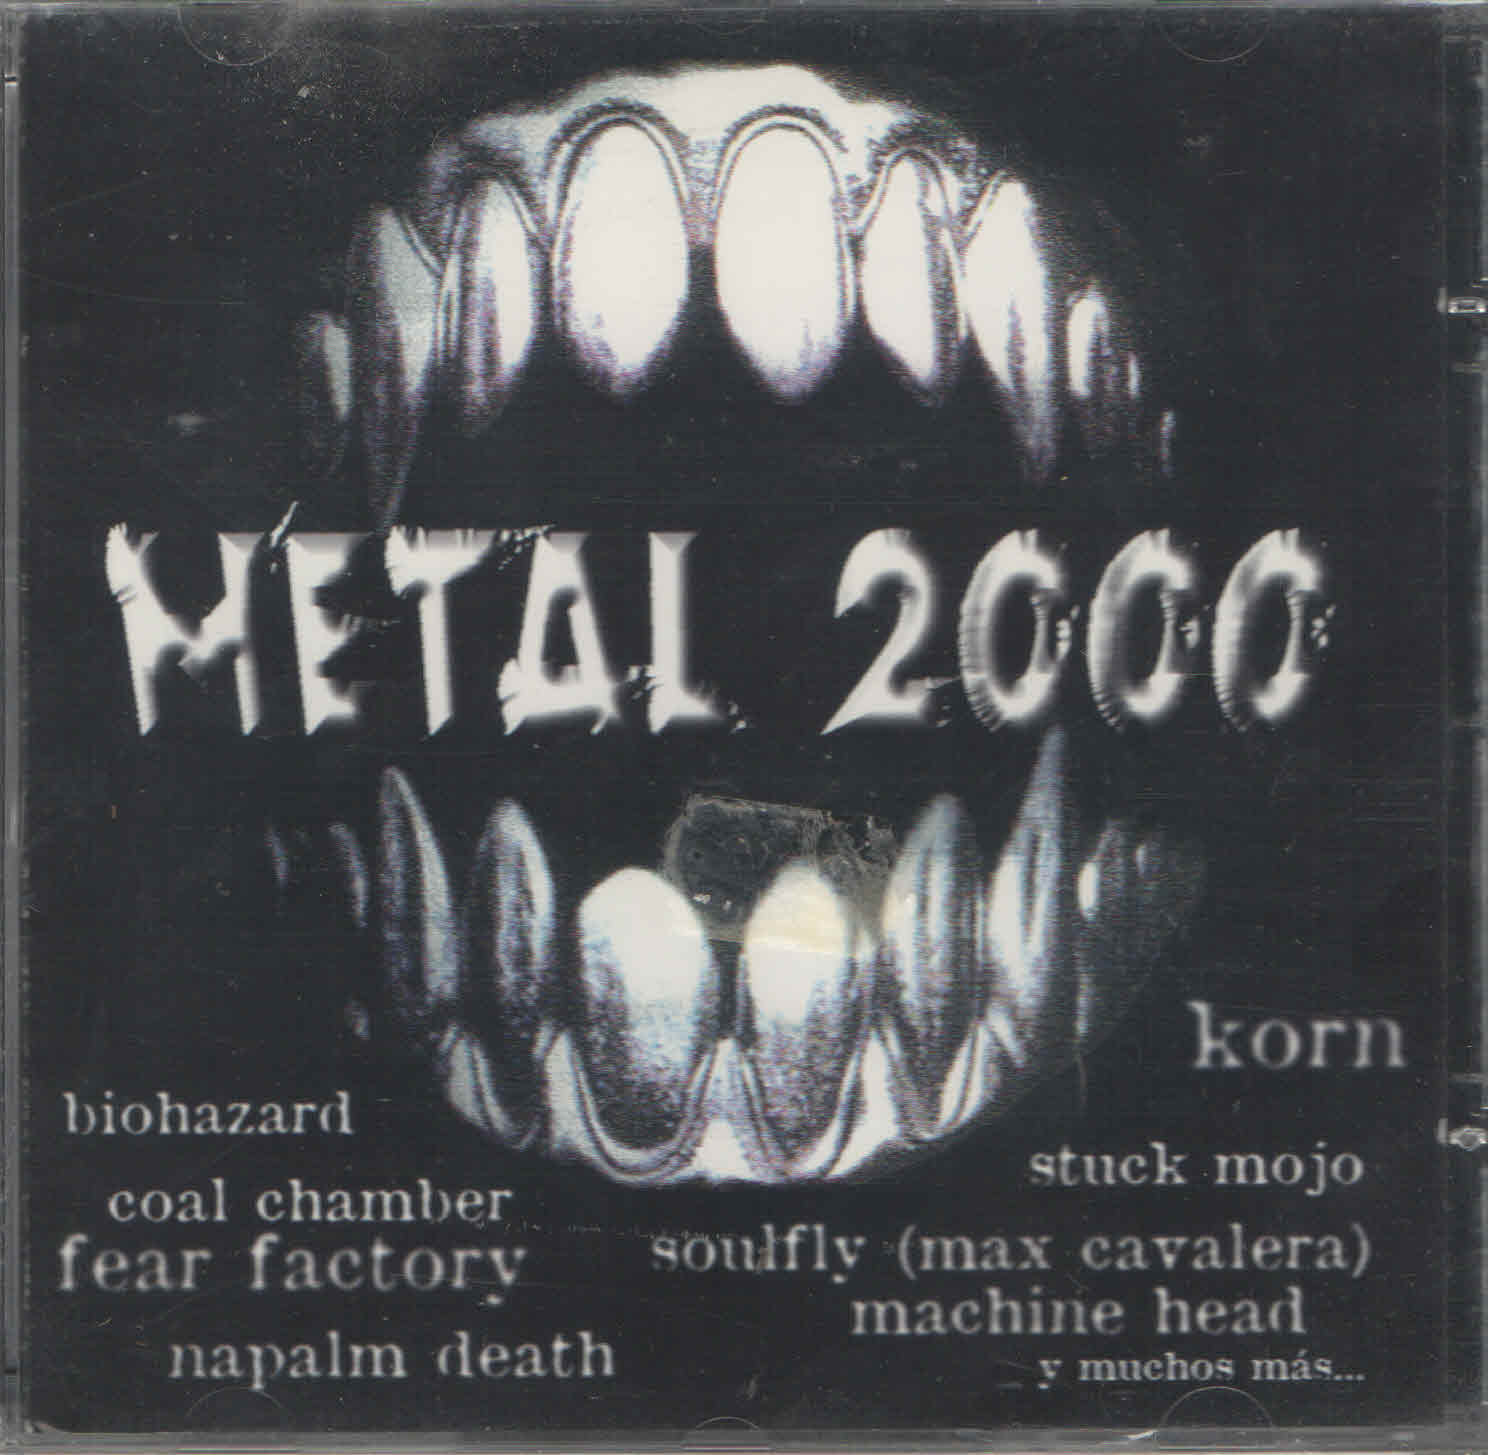 METAL 2000